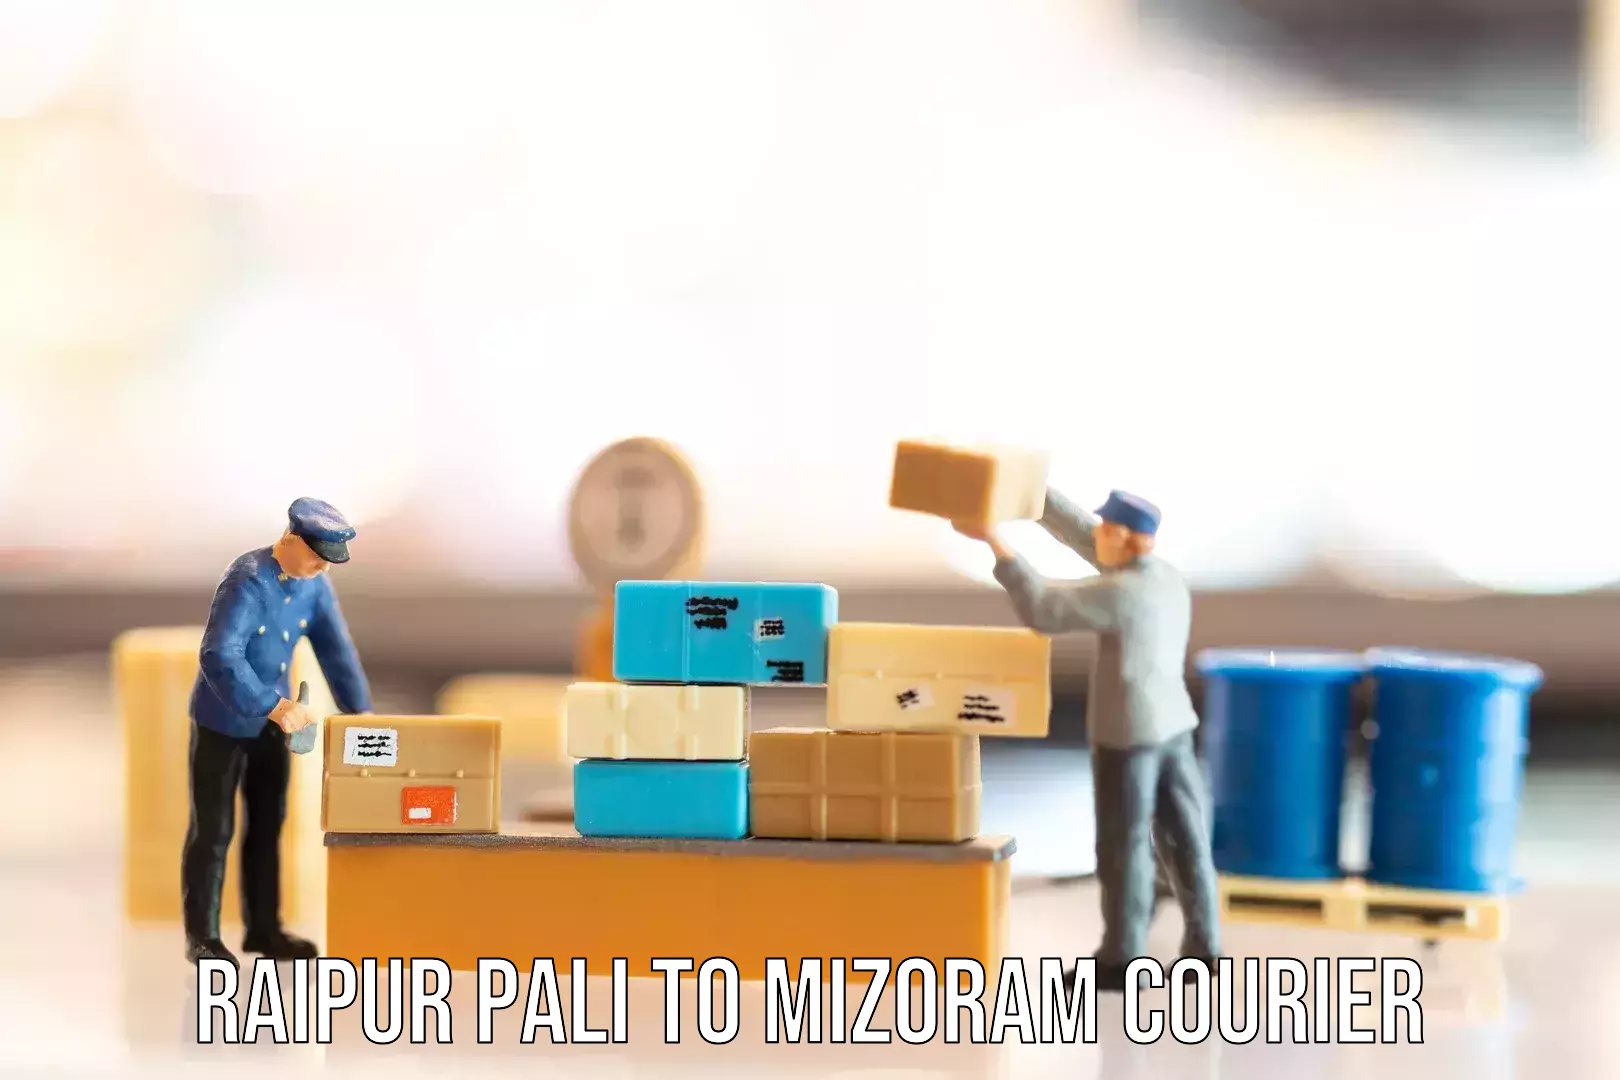 Luggage delivery system Raipur Pali to Mizoram